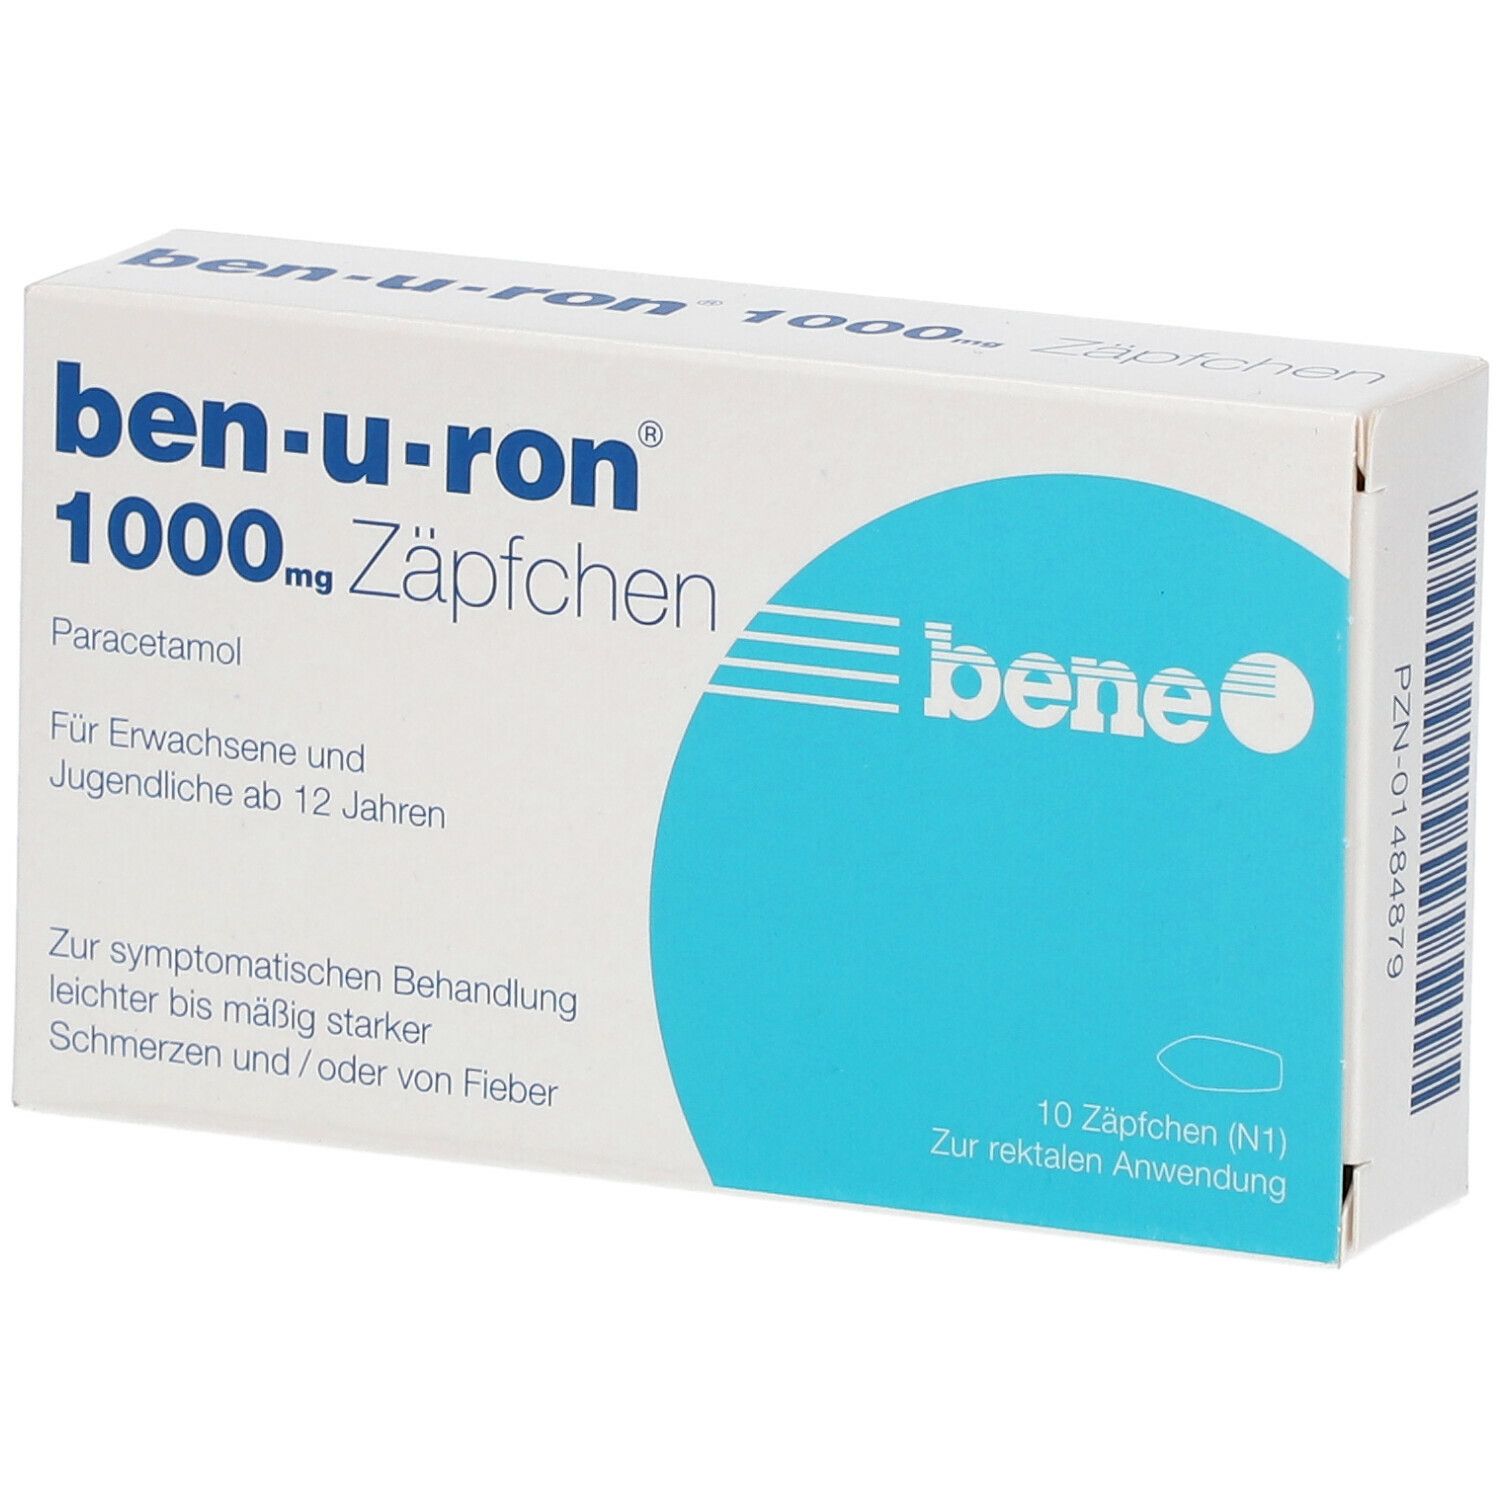 ben-u-ron® 1000 mg